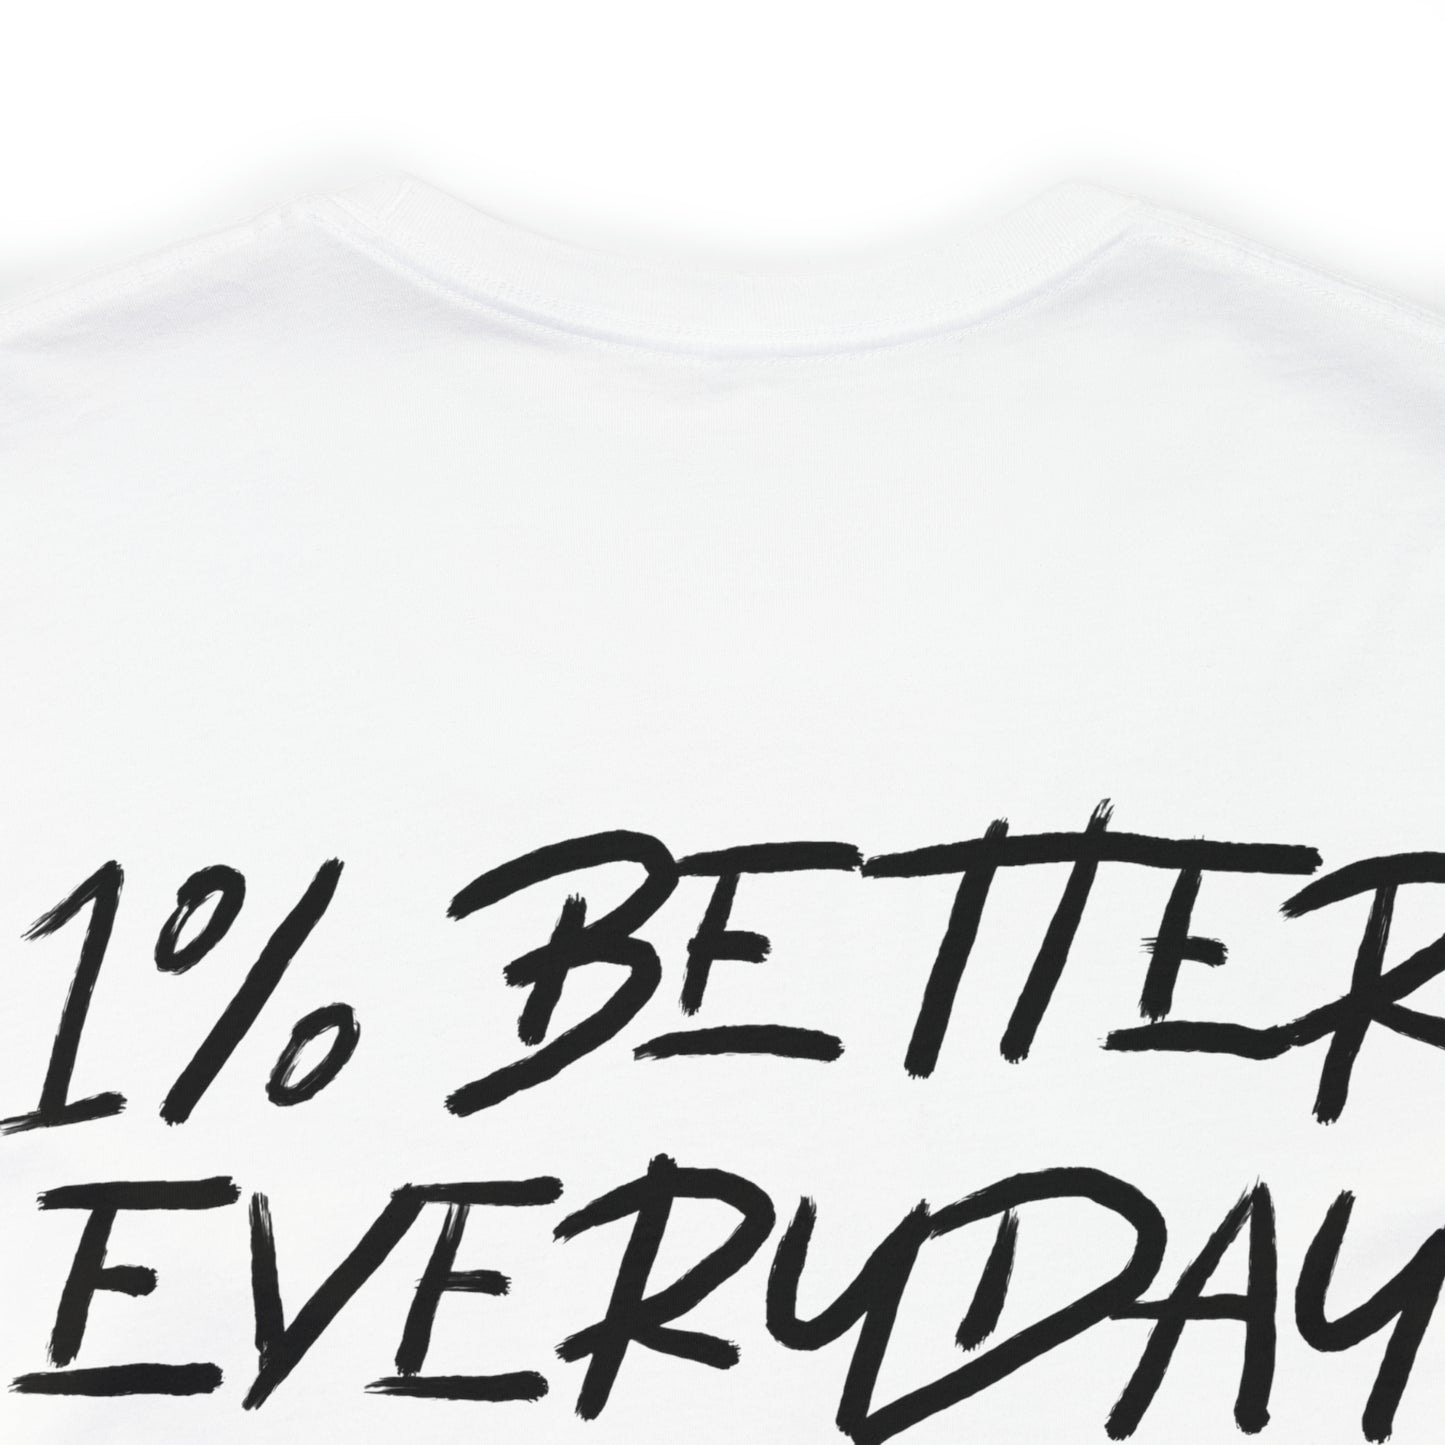 Ethan Jenkins: 1% Better Everyday Tee